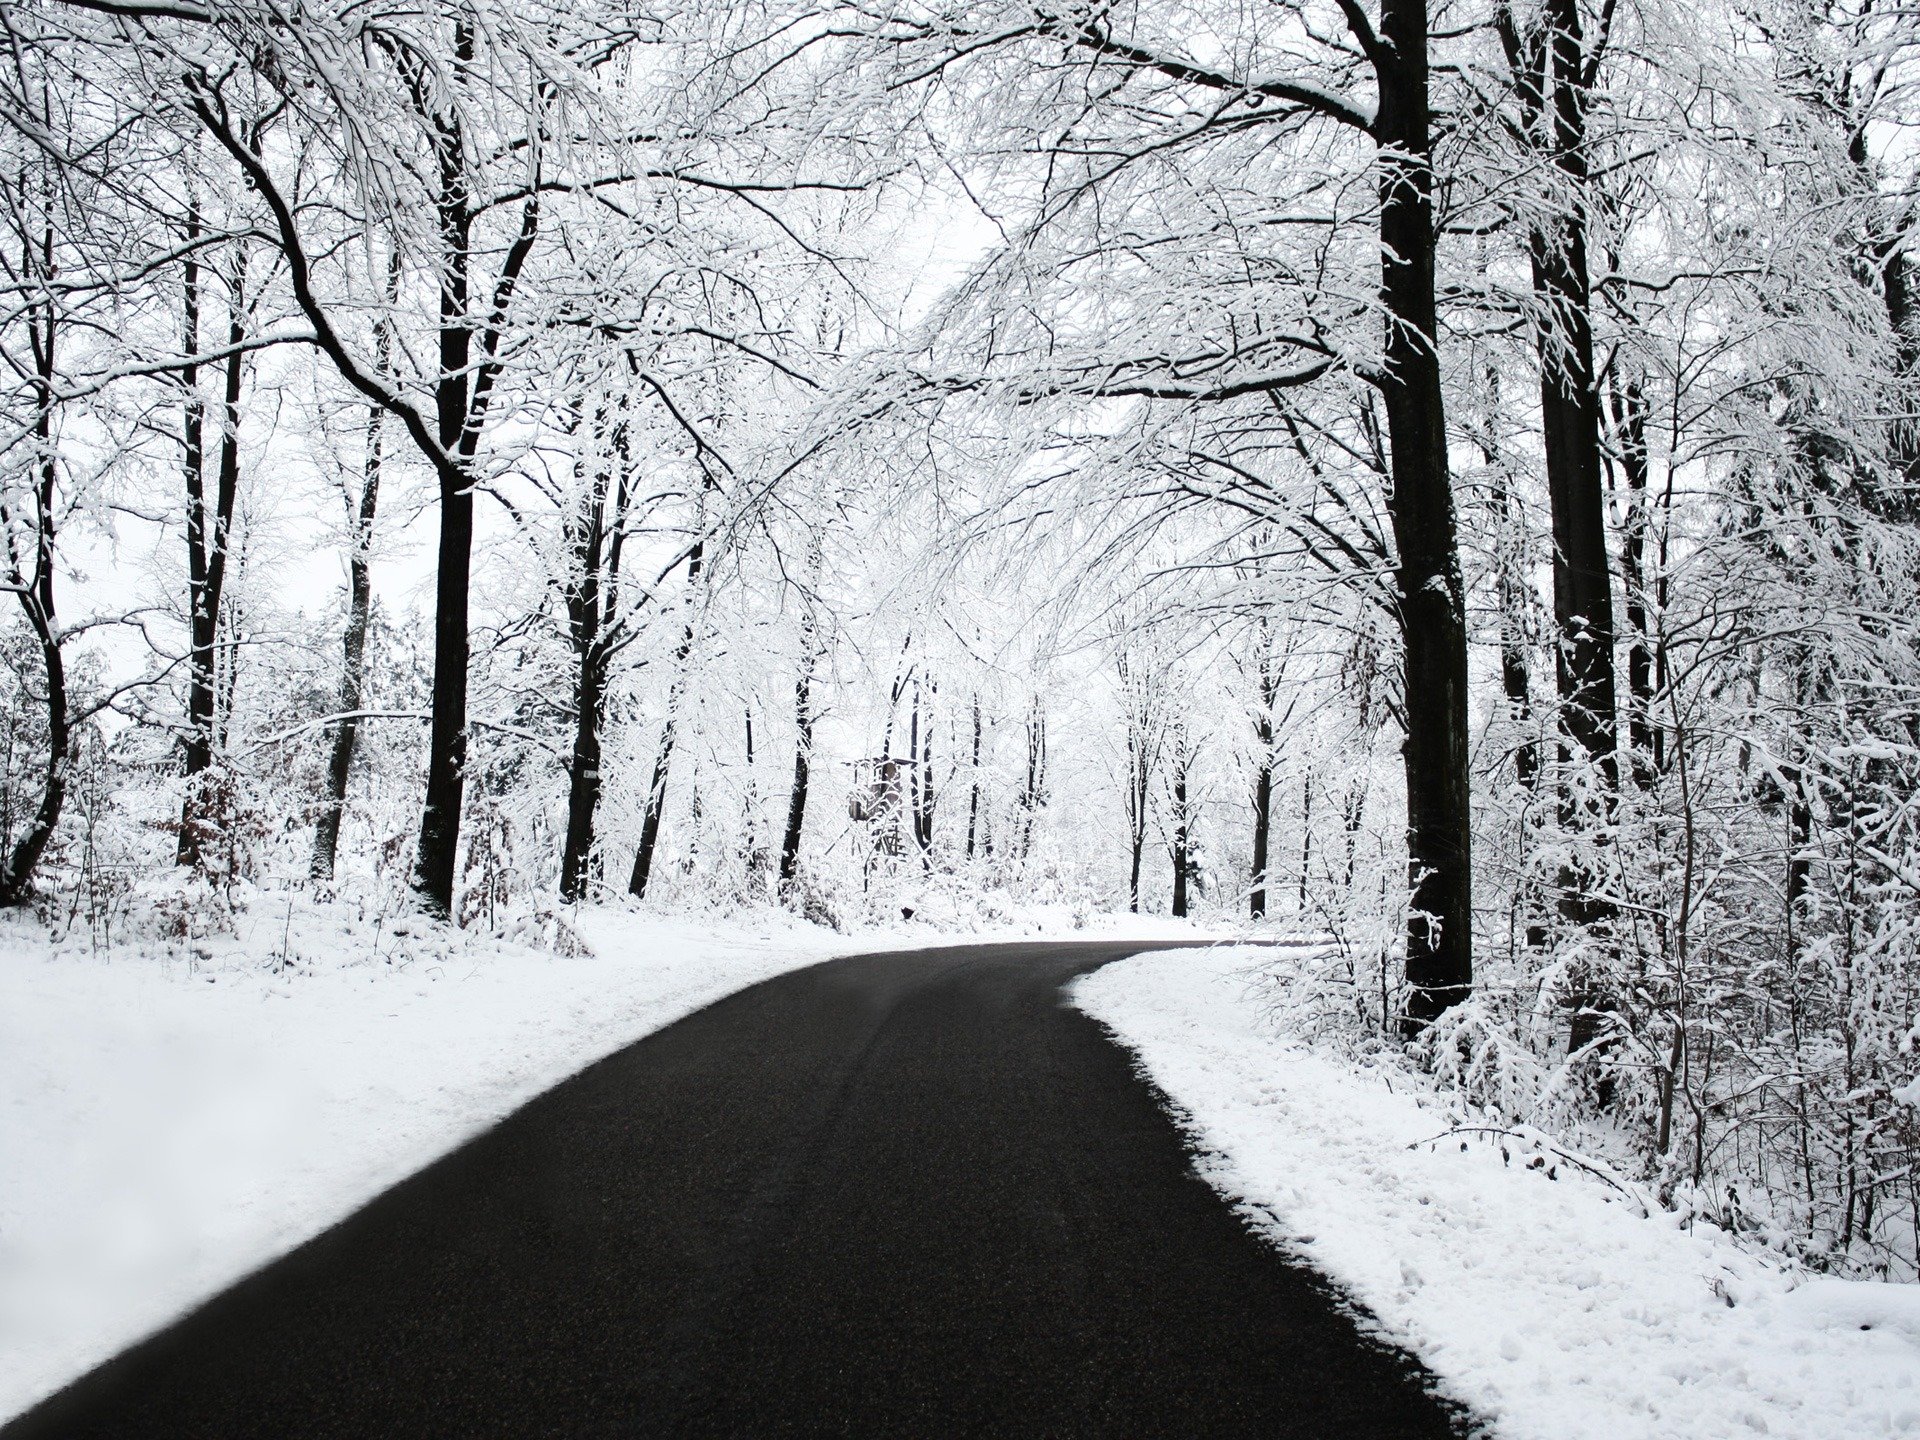 Snow is beautiful. Зимняя дорога. Зимняя дорога в лесу. Заснеженная дорога в лесу. Зимняя Лесная дорога.